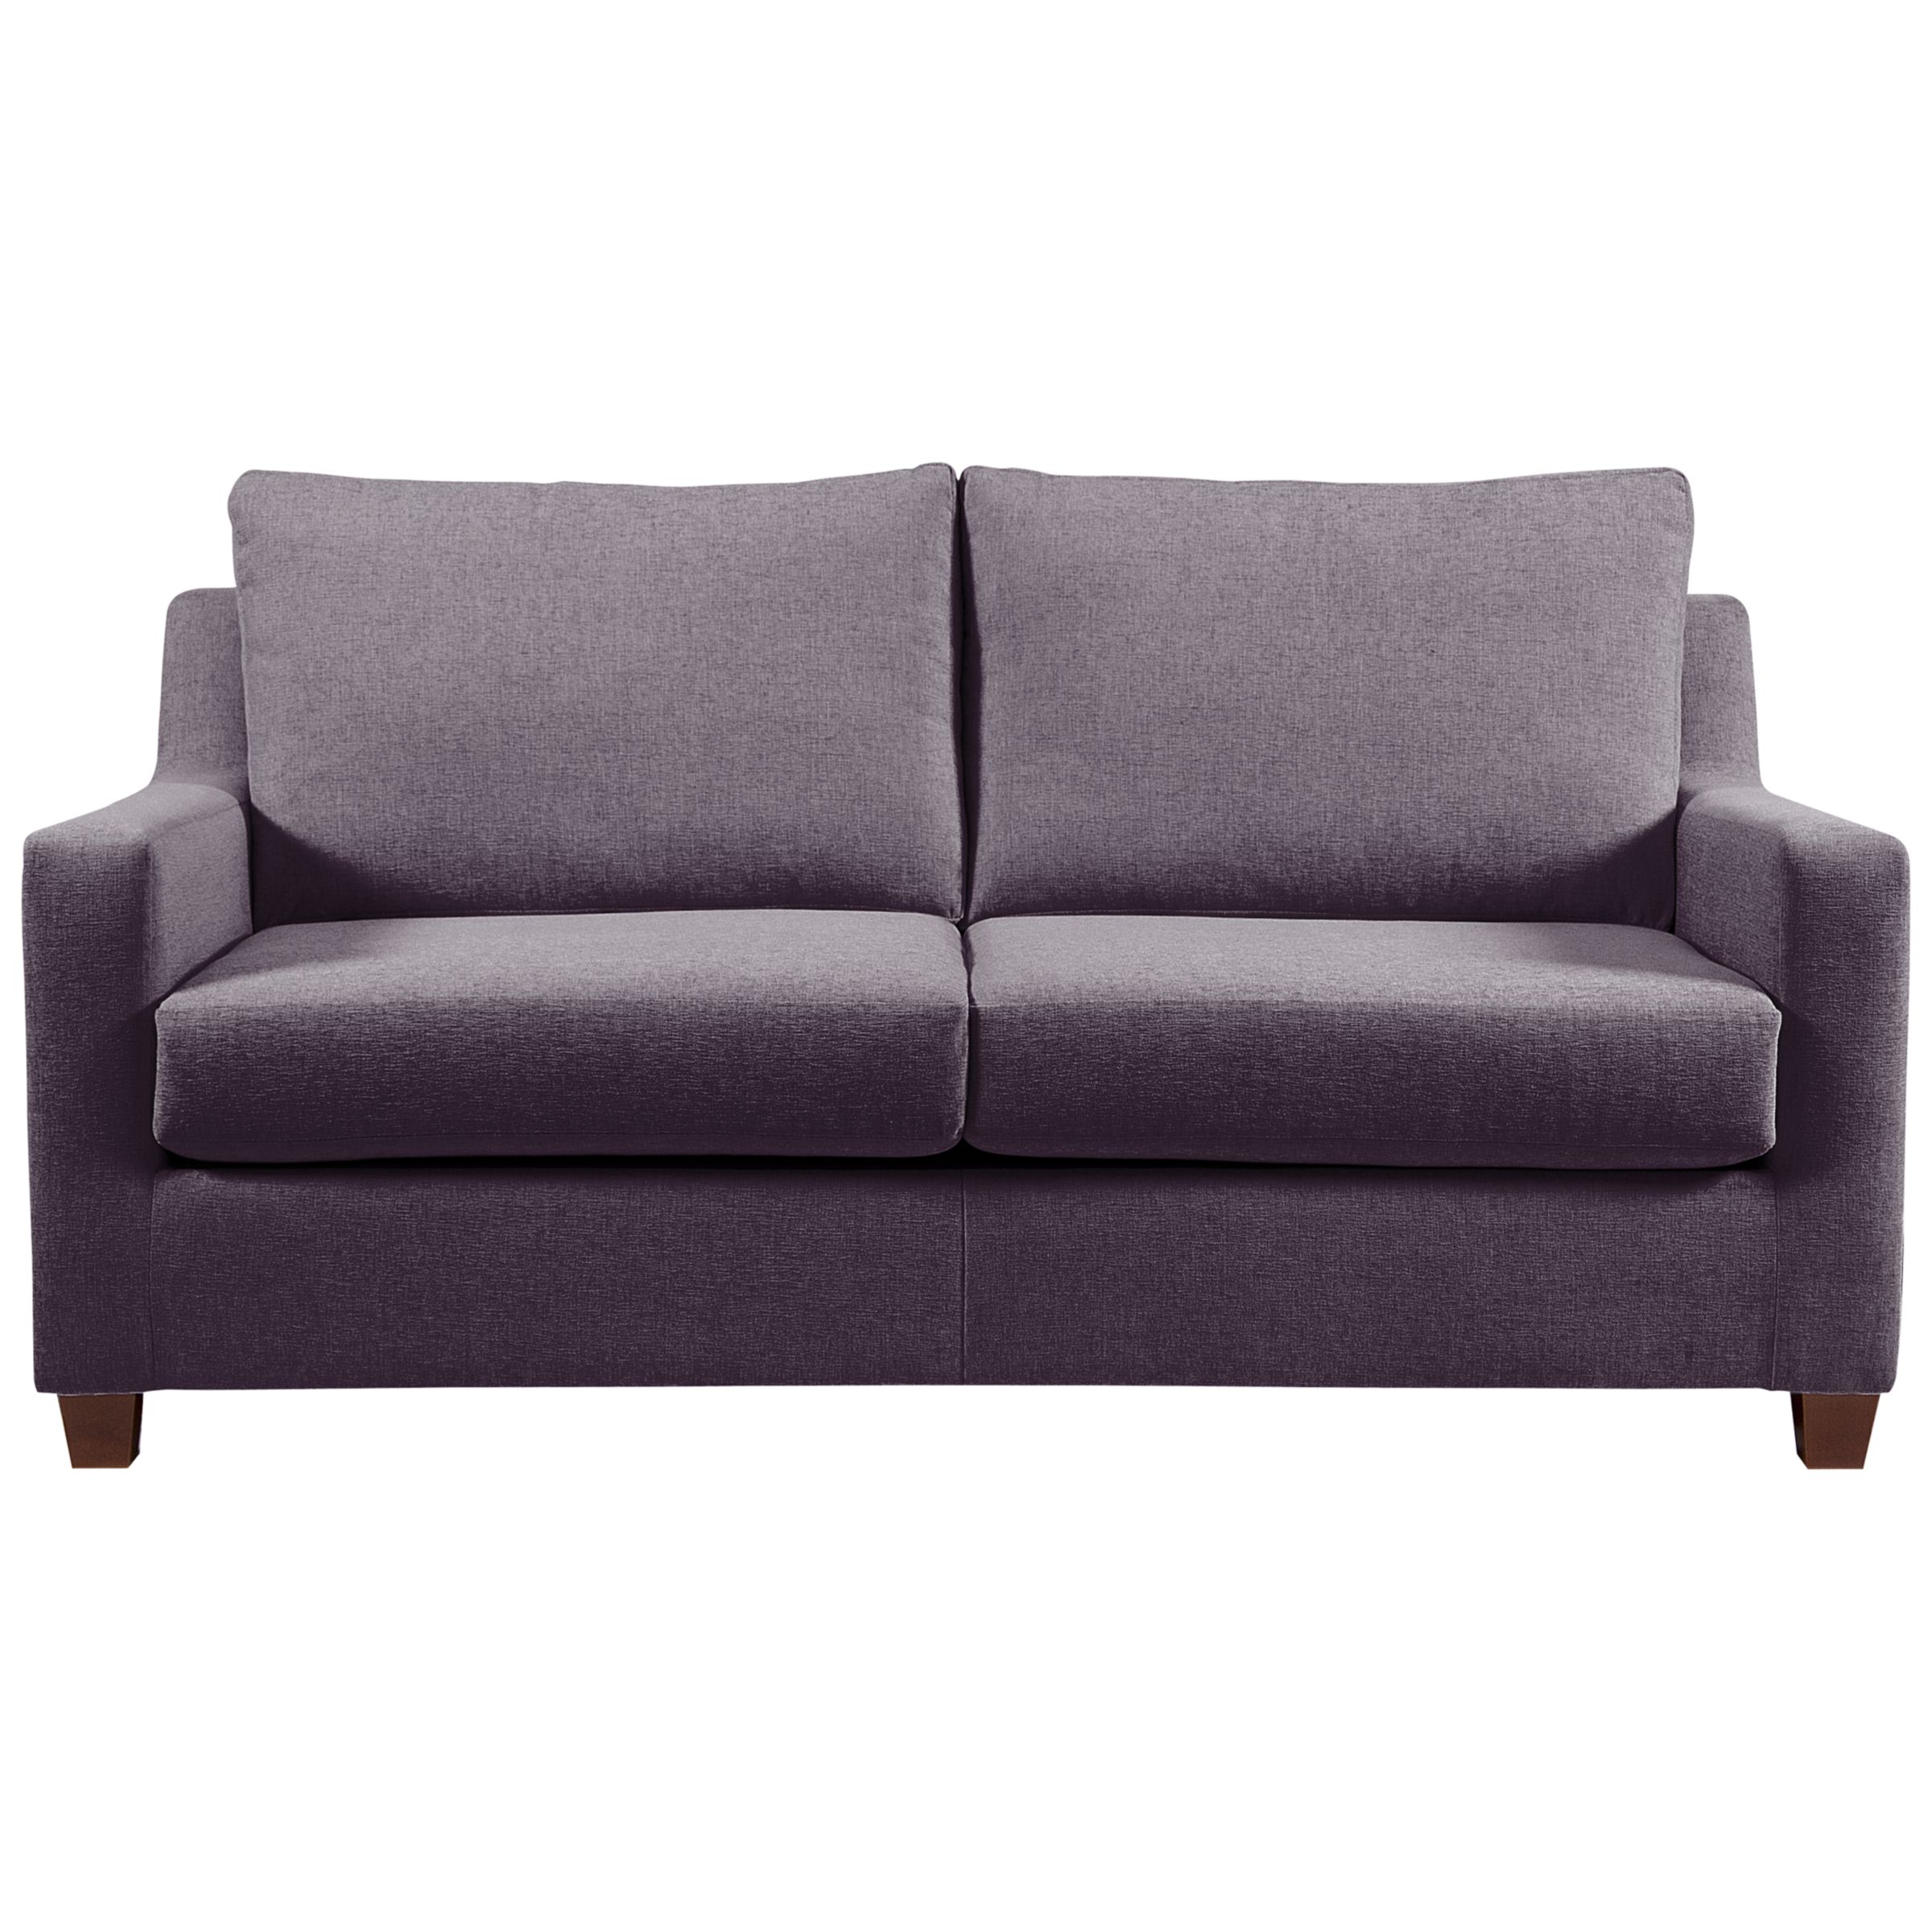 John Lewis Bizet Medium Sofa, Purple, width 178cm